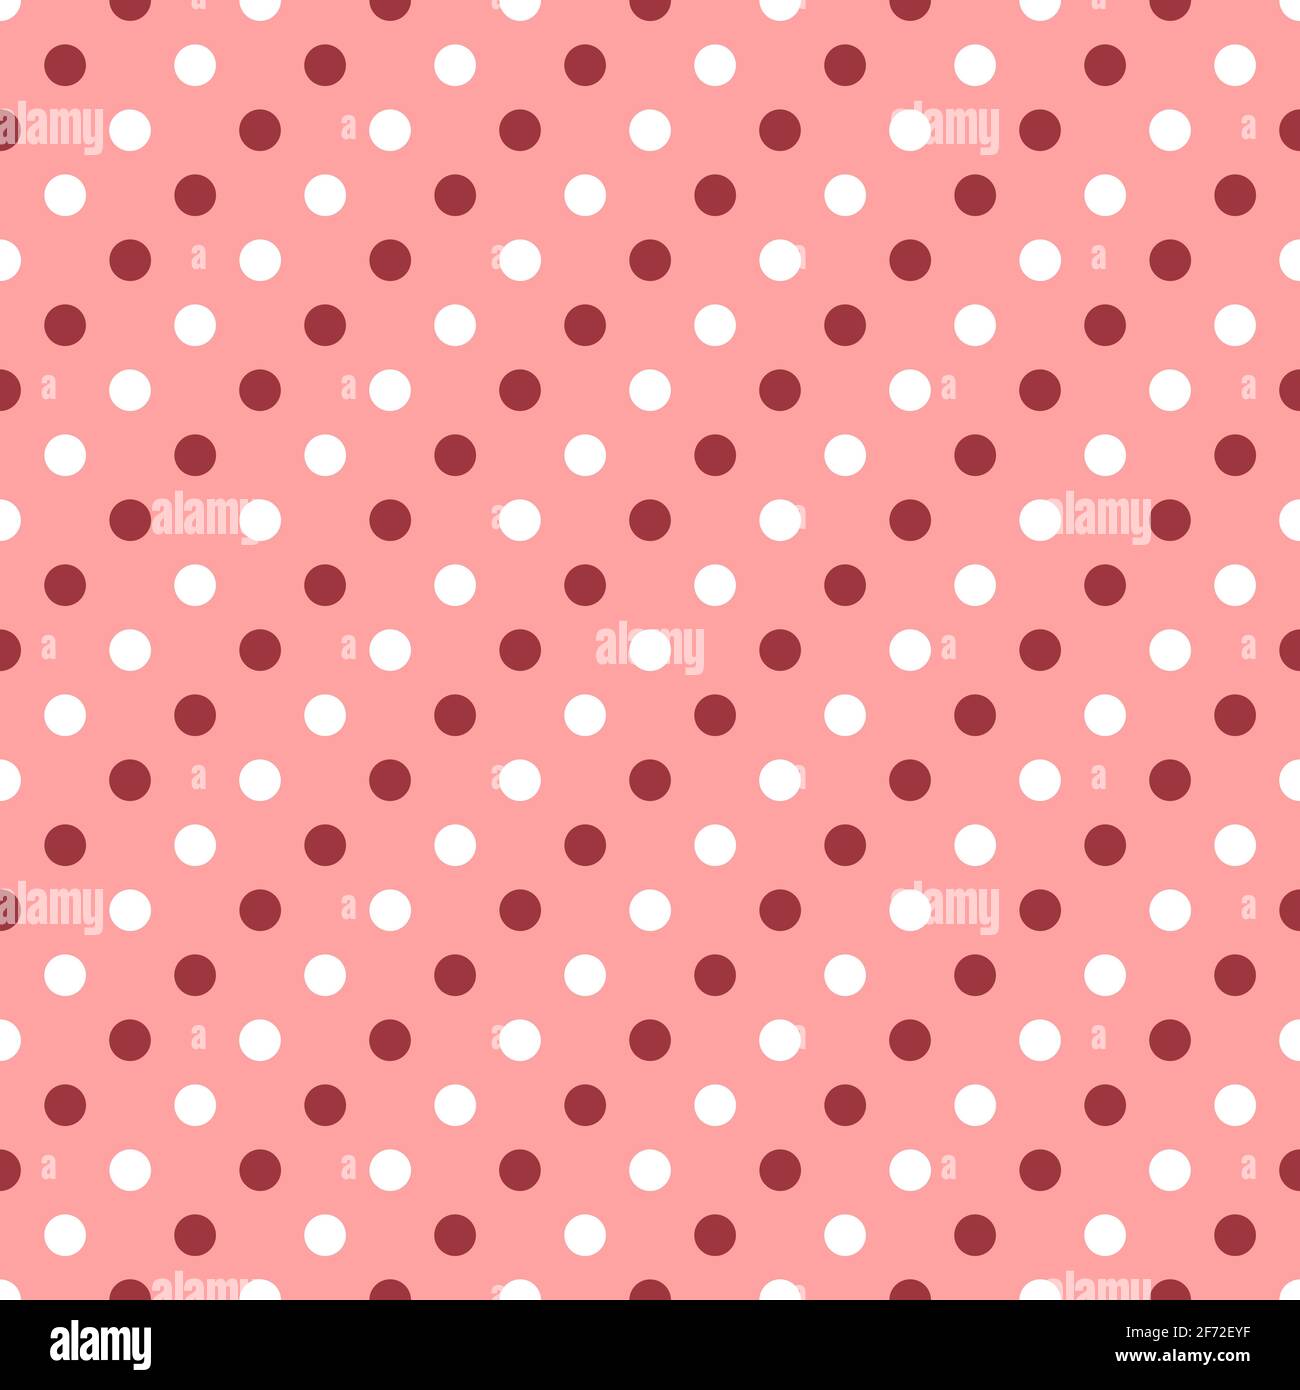 Vintage polka dots in vanilla pink tones Stock Vector